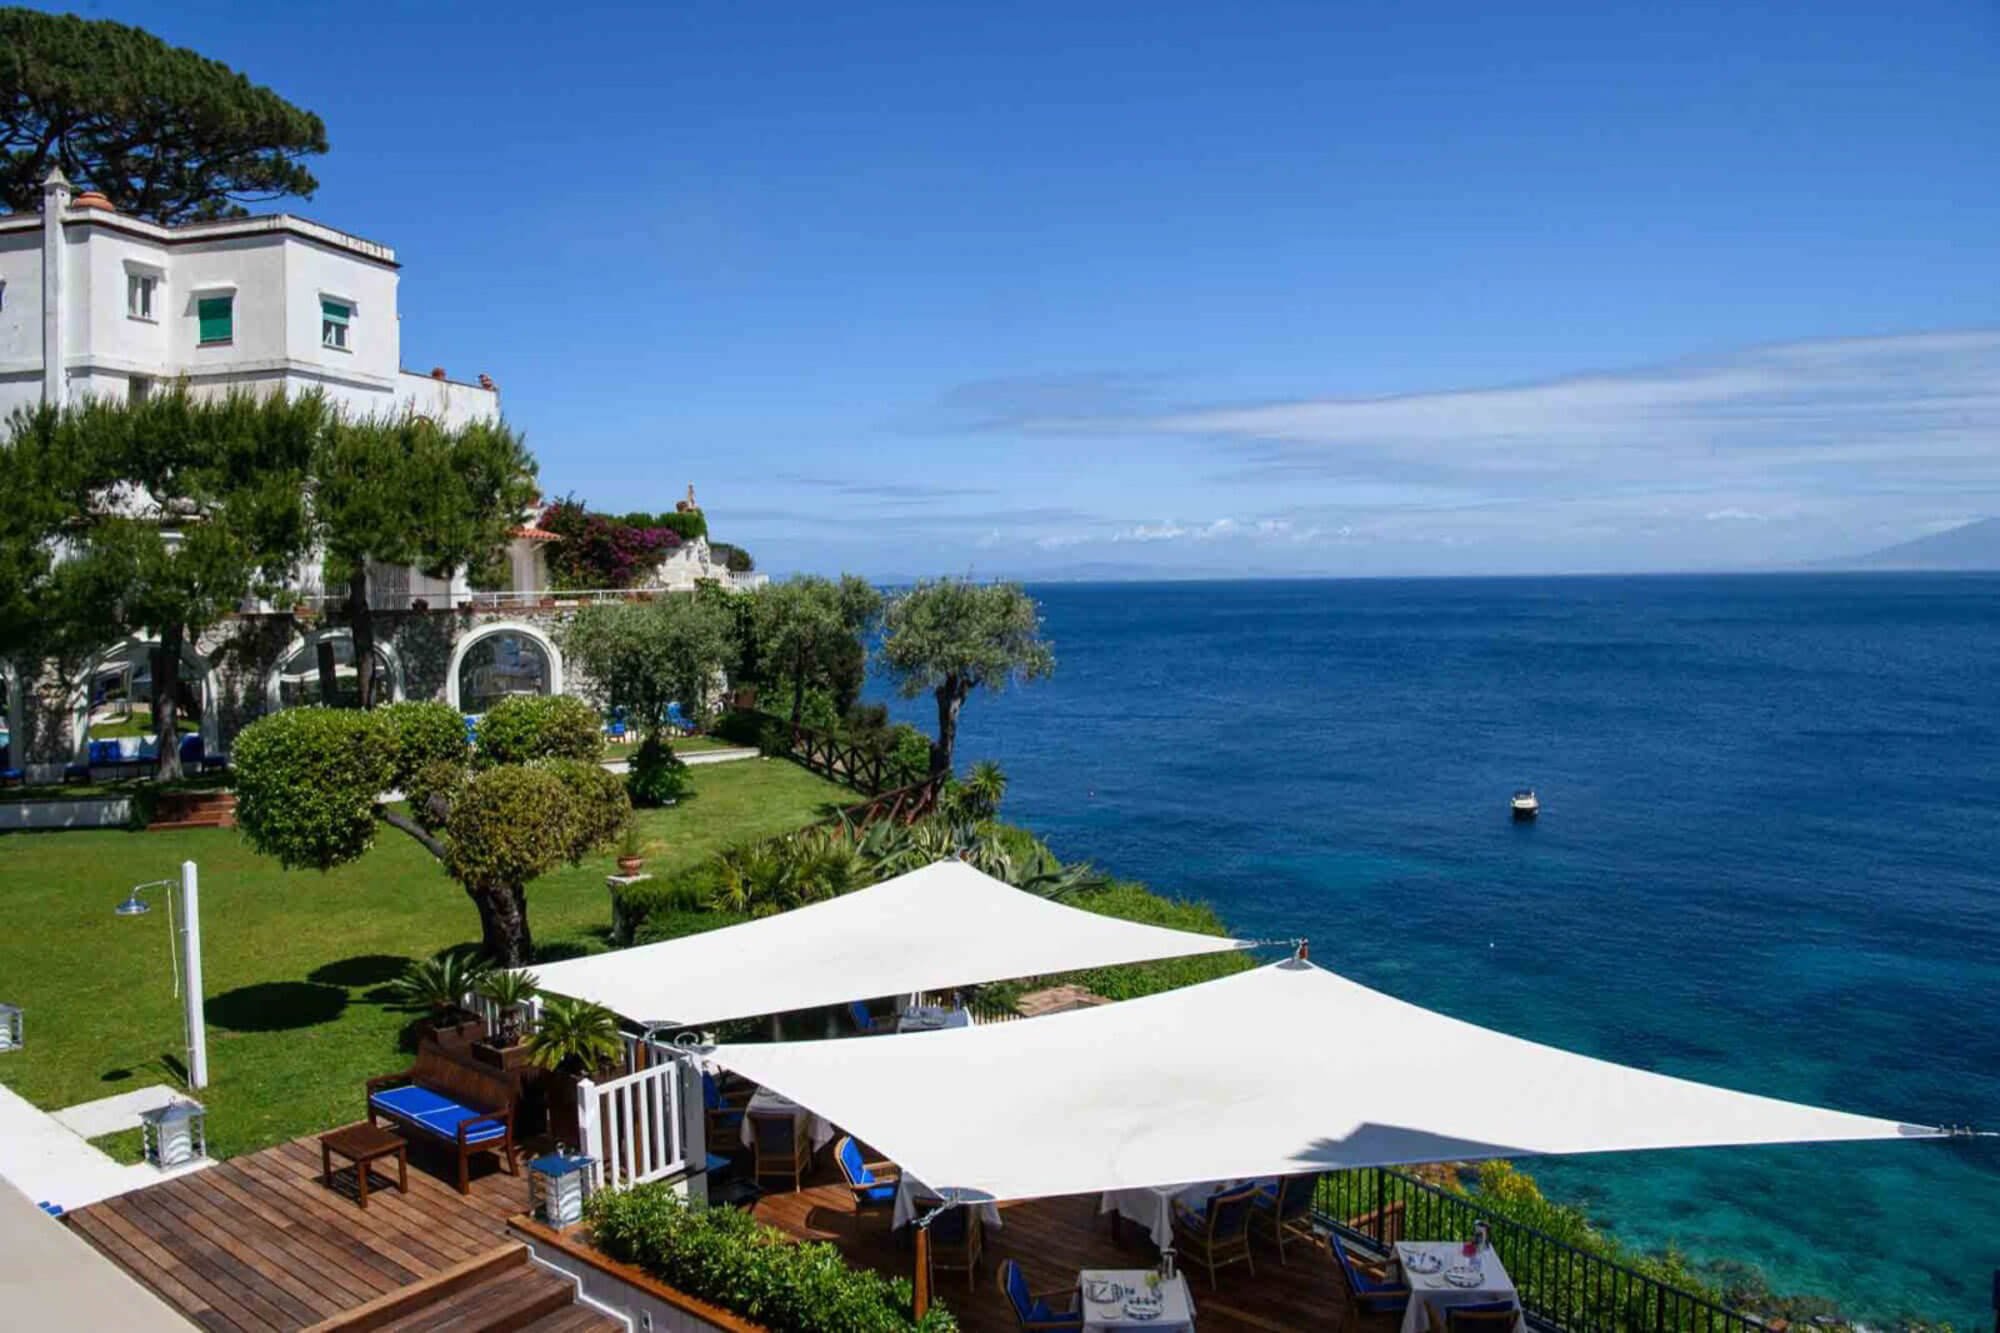 J. K. Place Capri is one of the best 5 star hotels in Capri